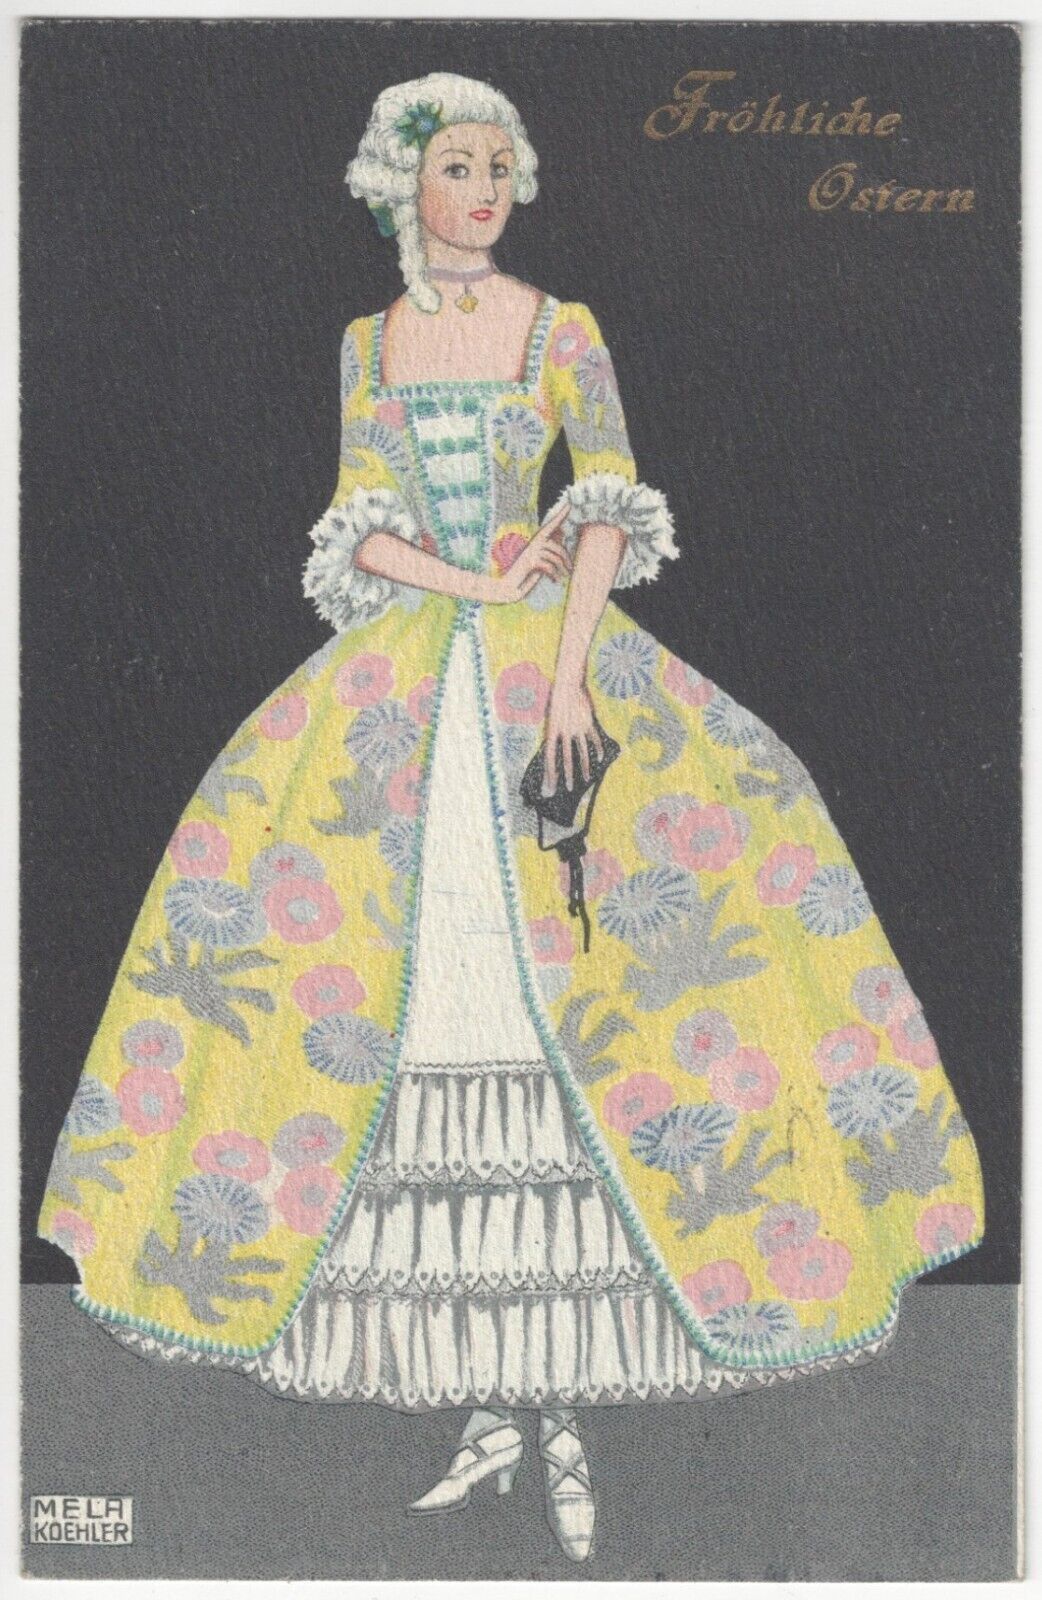 1910 Artist Signed Mela Koehler - Beautiful Victorian Woman, Elaborate Dress